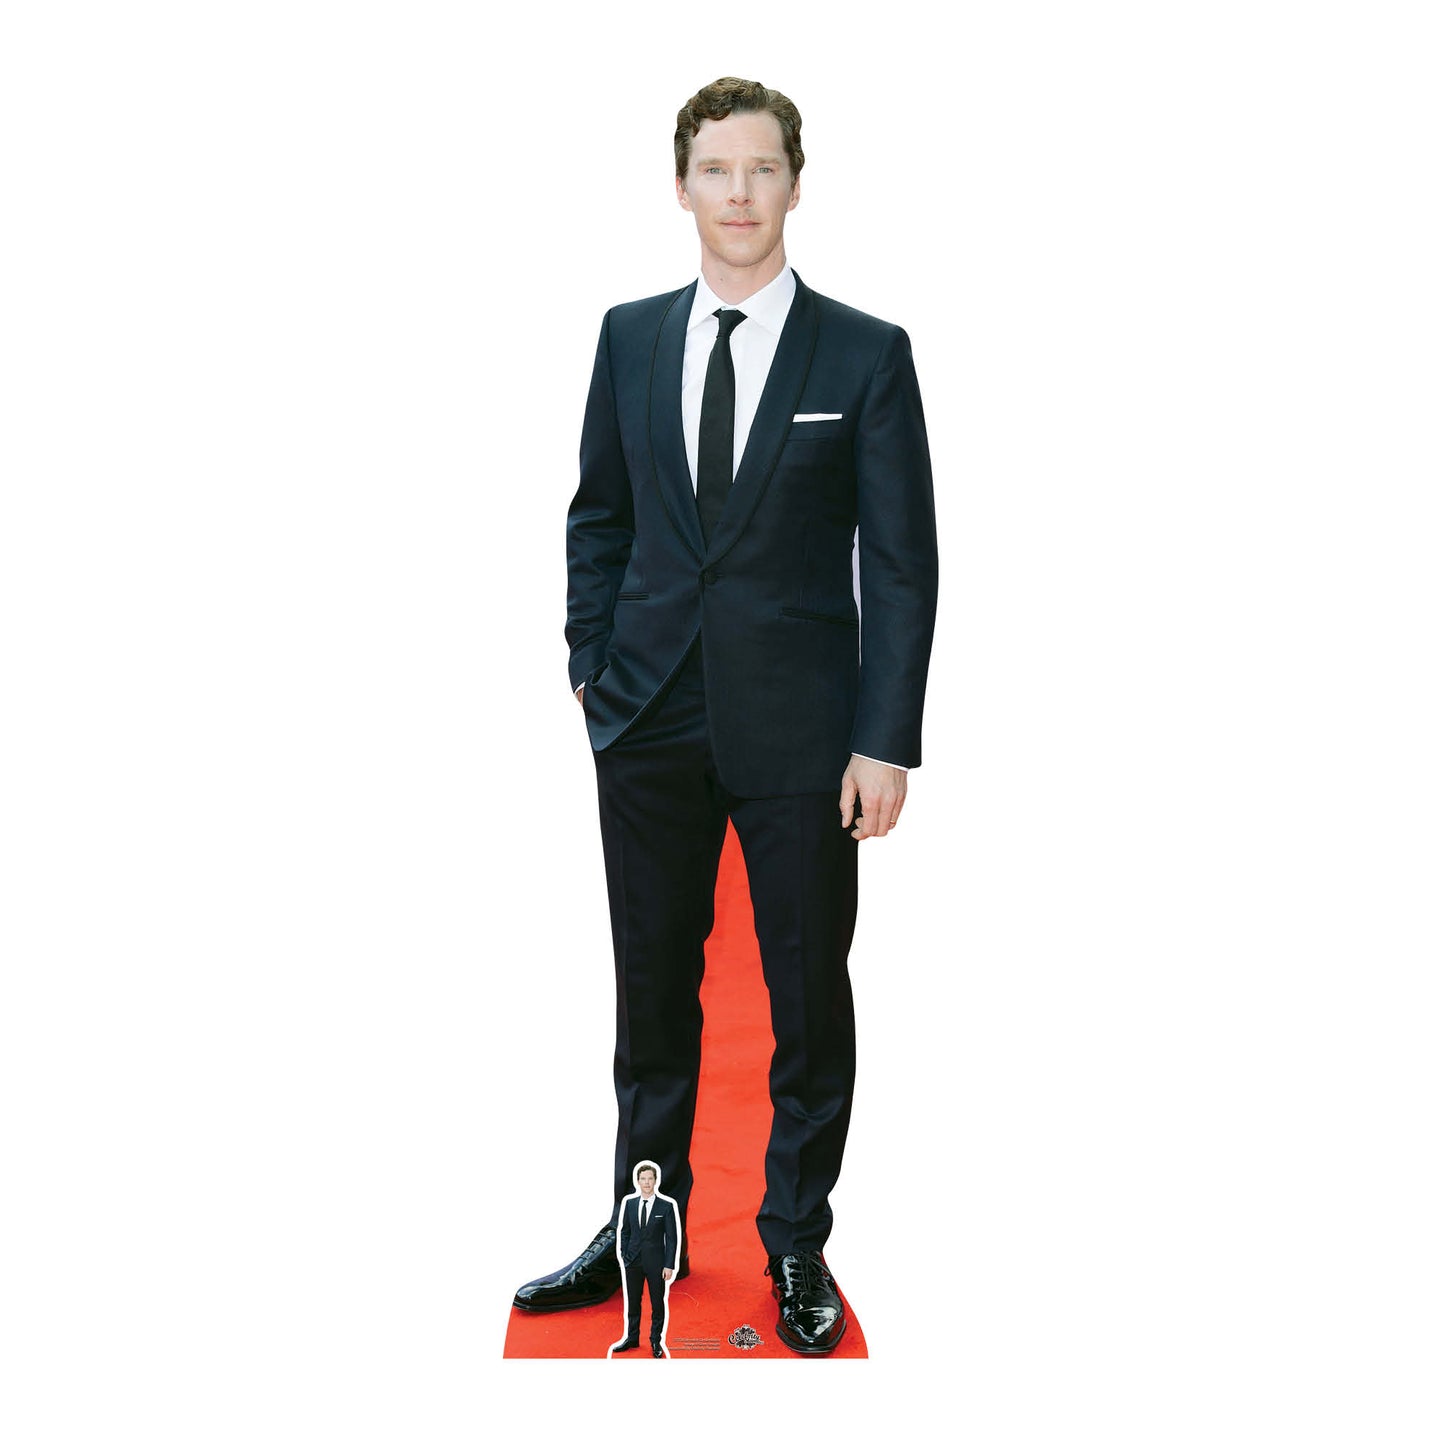 Benedict Cumberbatch Smart White Pocket Square Cardboard Cutout